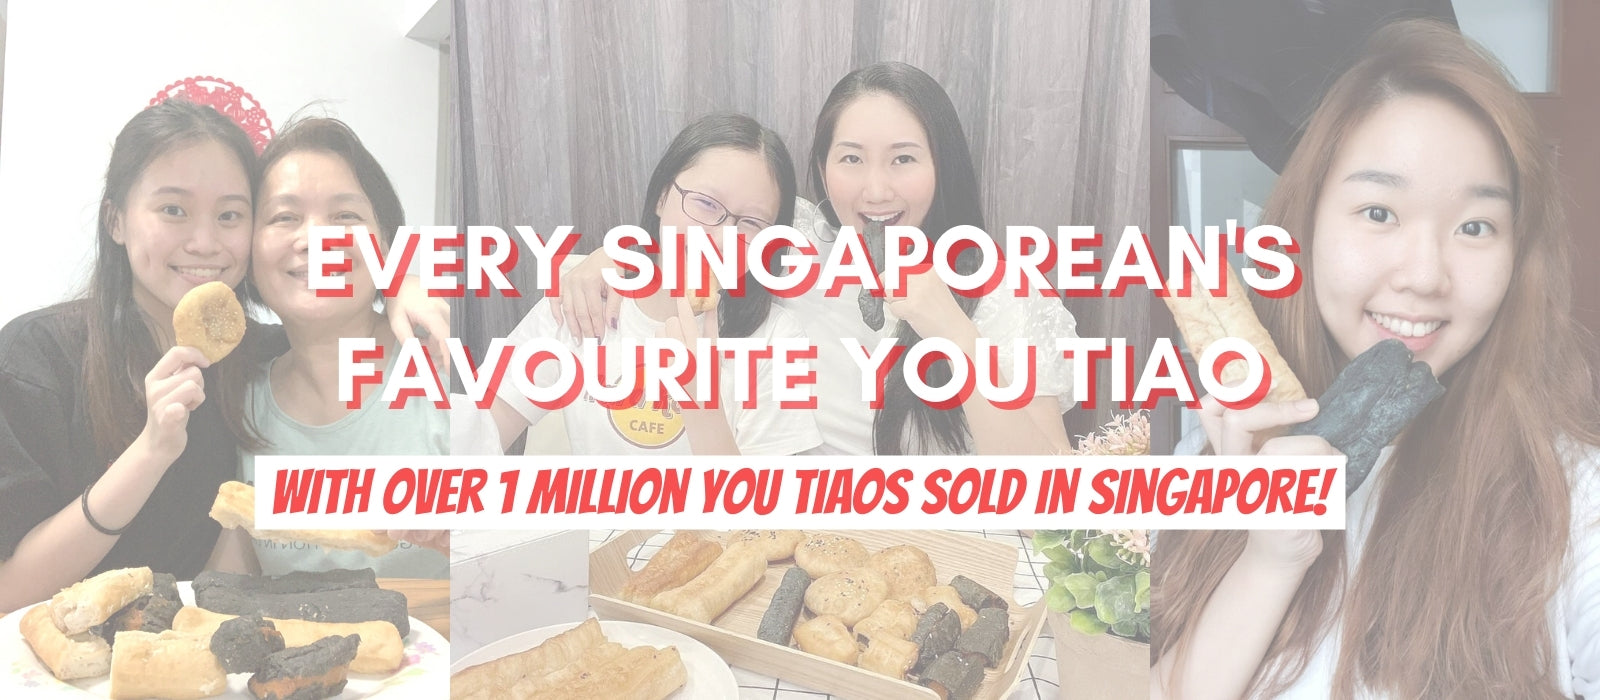 Singaporean's Favourite Fried You Tiao